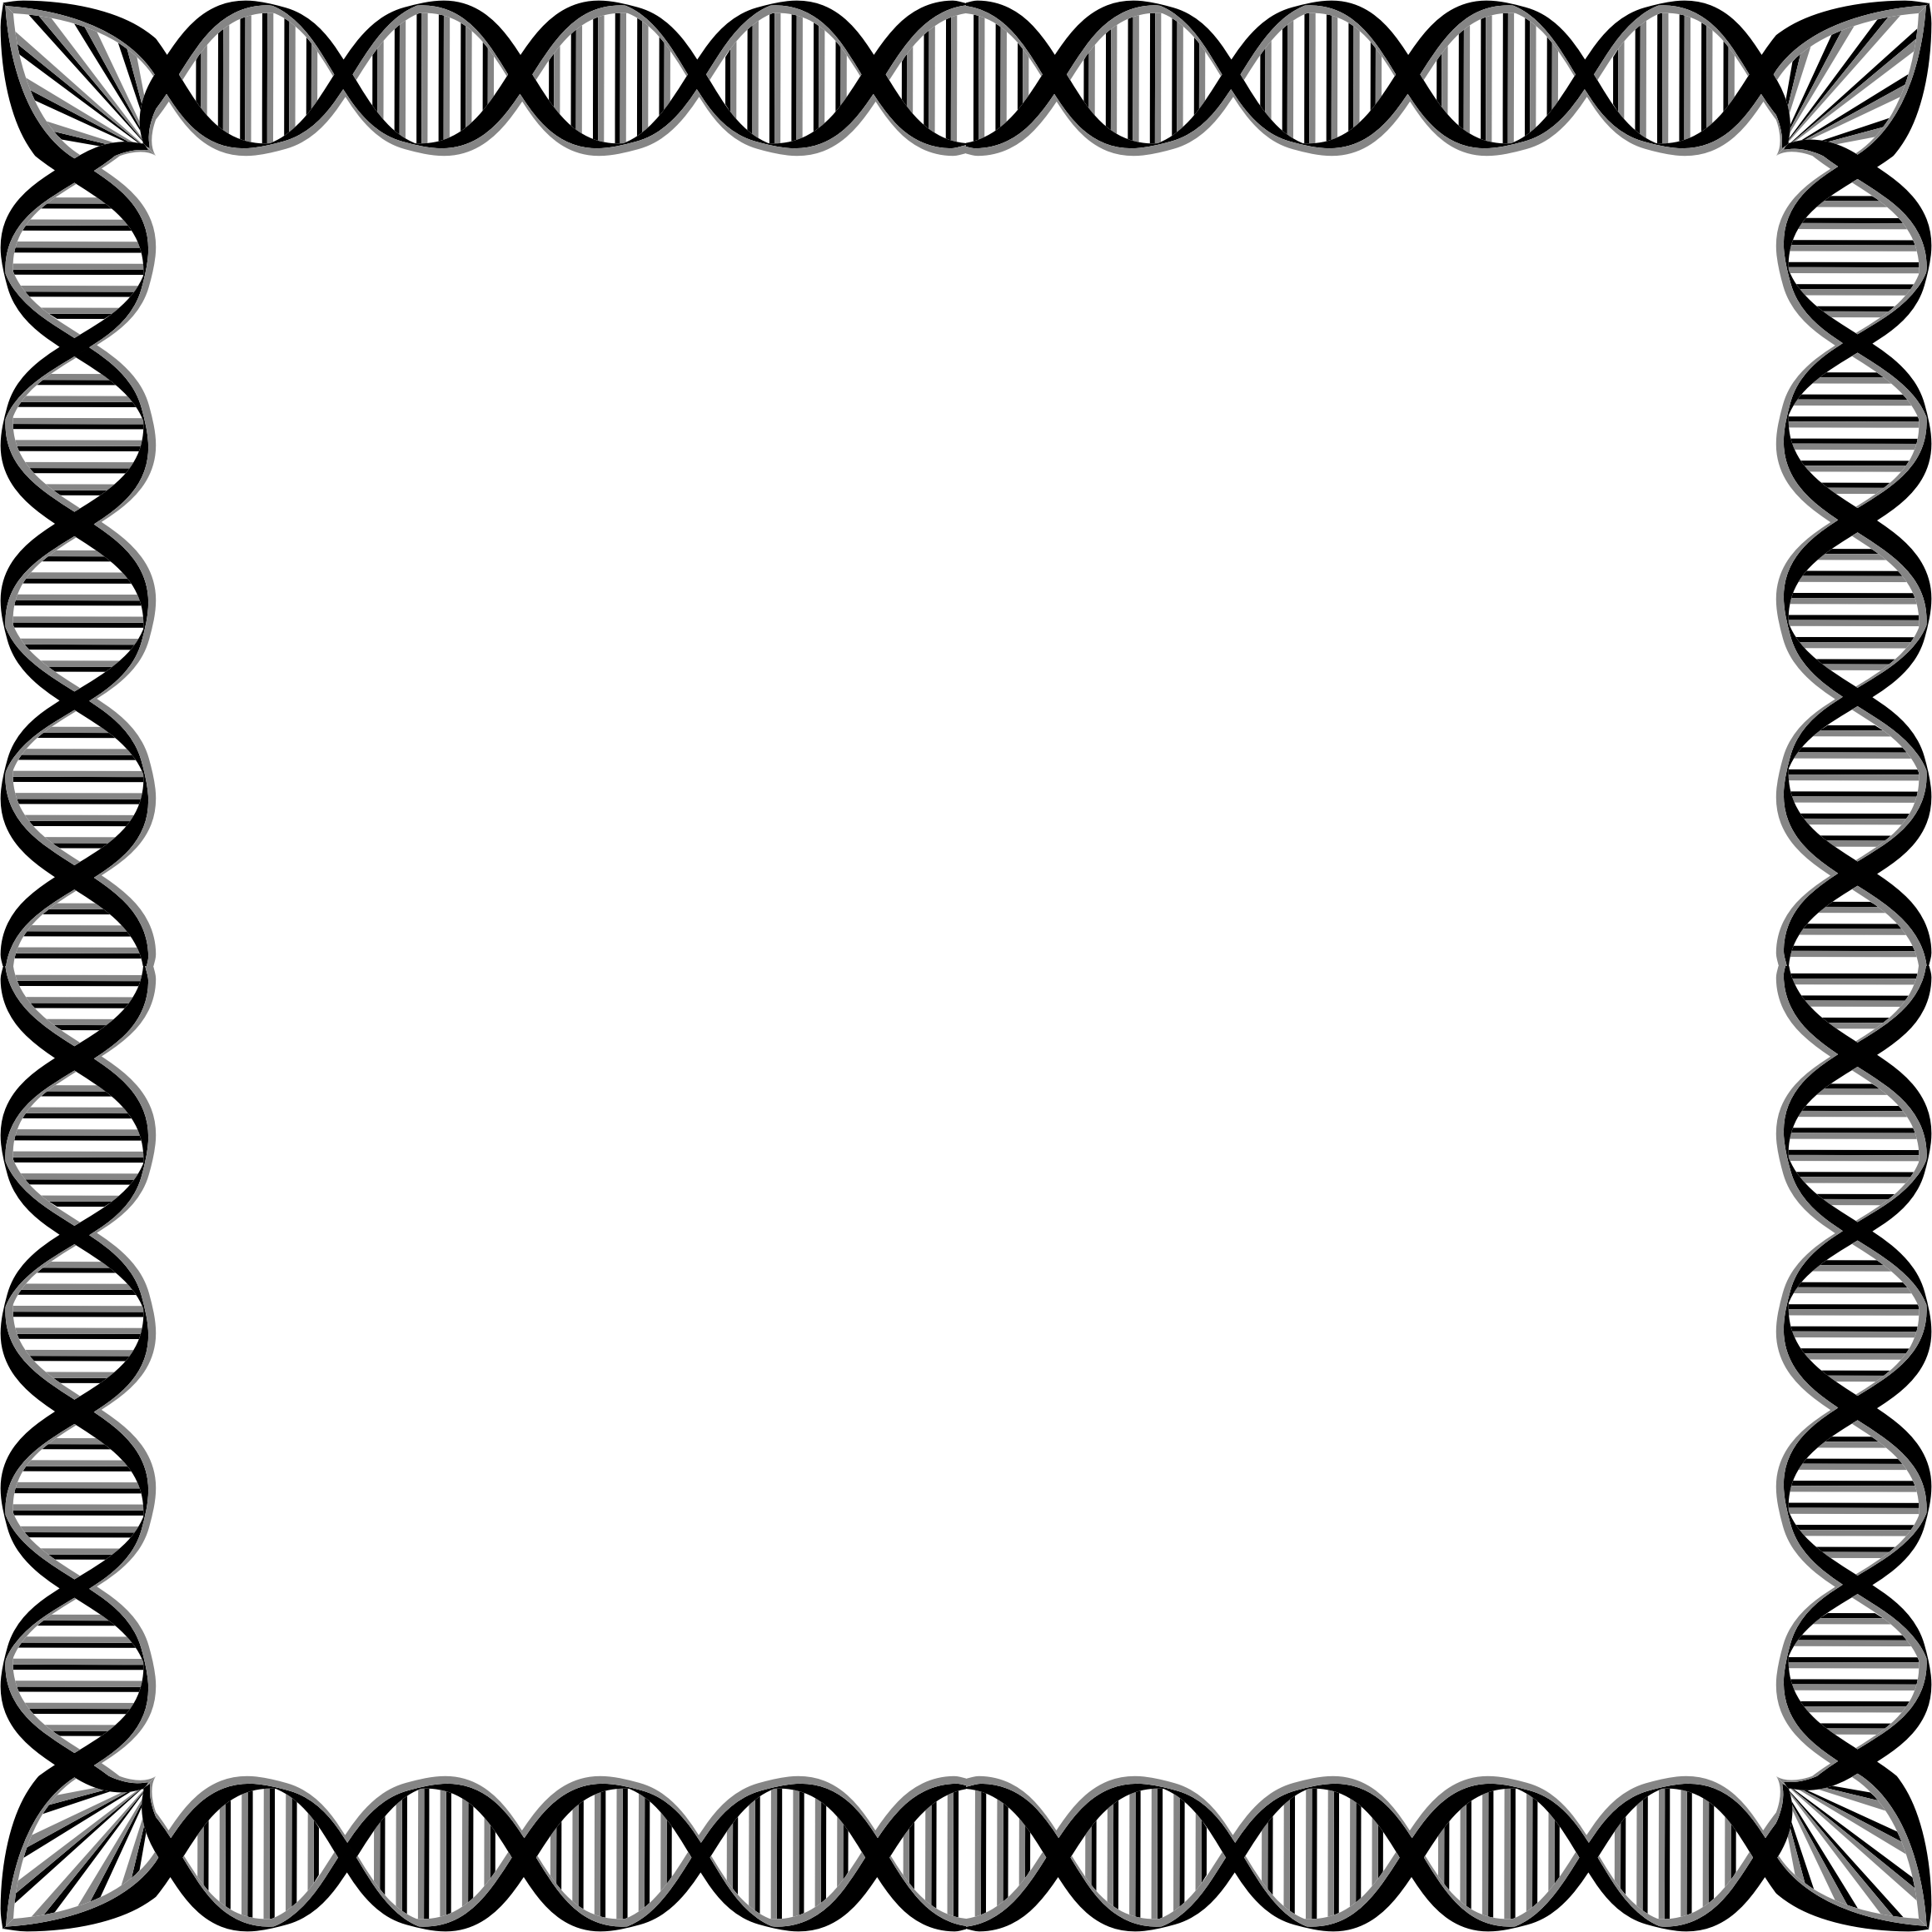 Dna - Biology Borders (2320x2320)